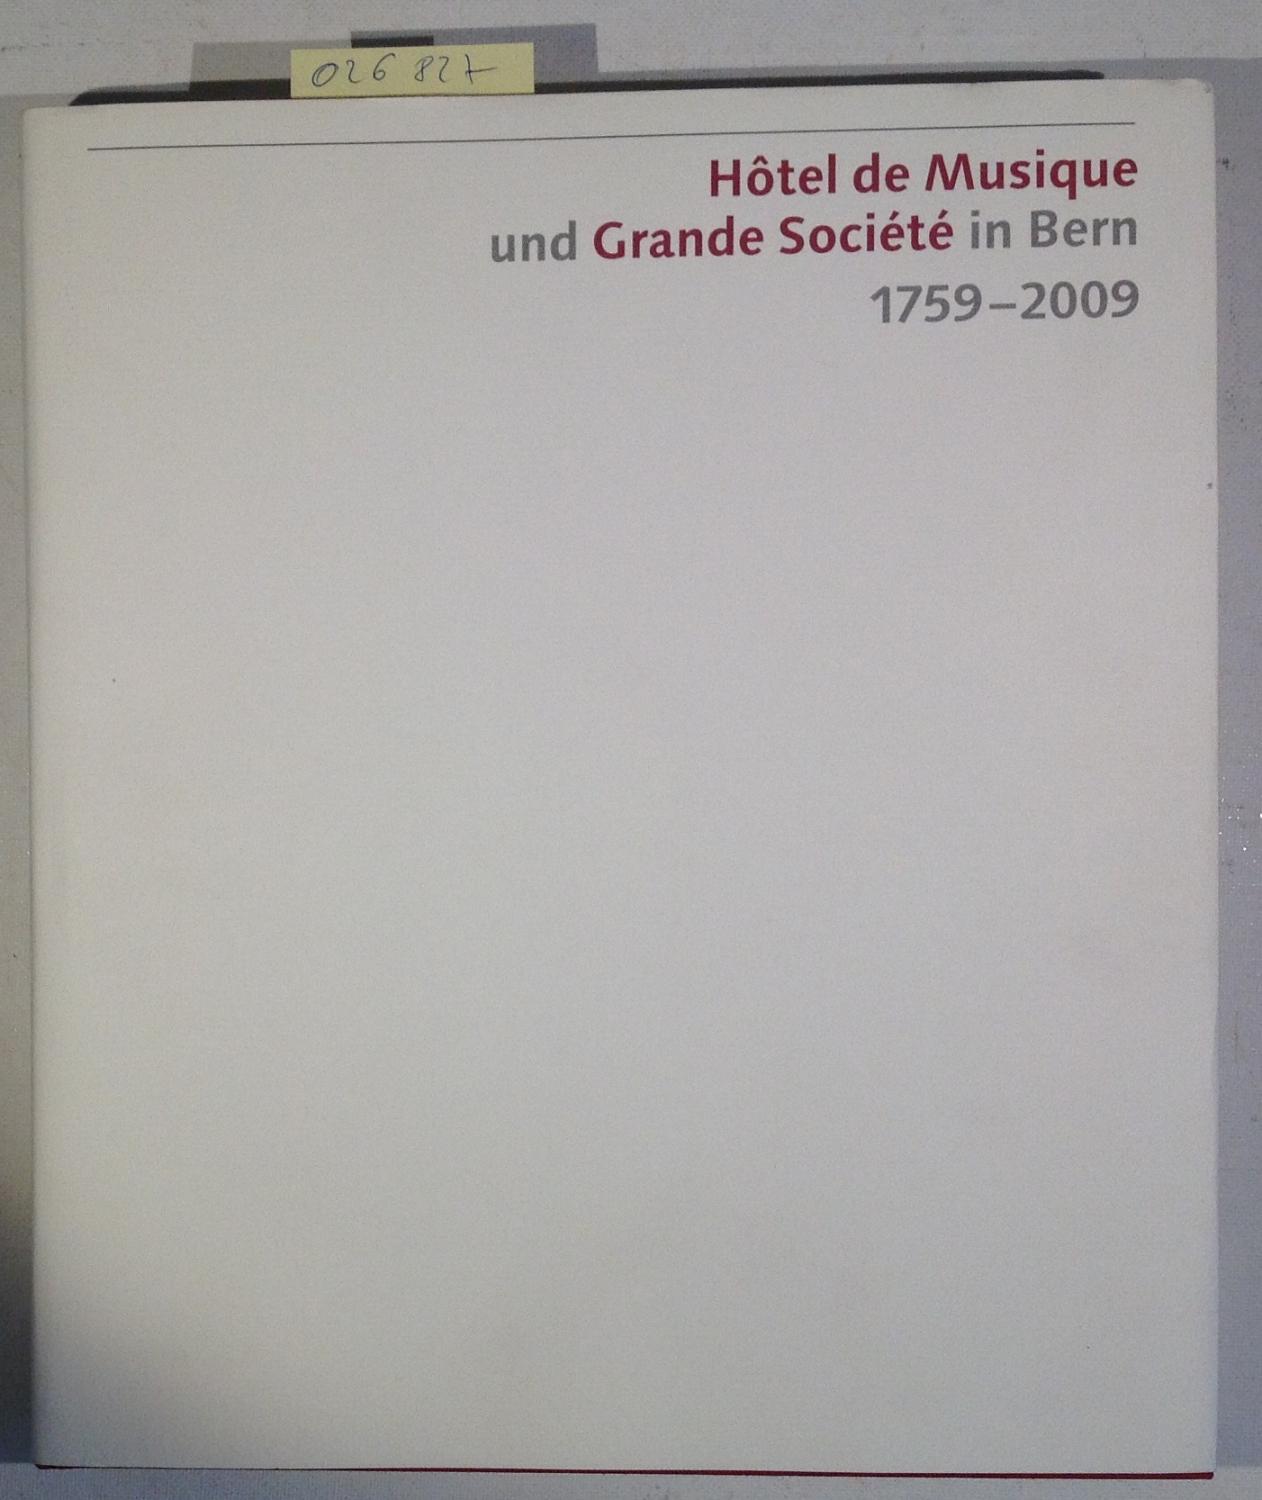 Hotel de Musique und Grande Societe in Bern 1759-2009 - Lehmann, Claudia - Redaktion